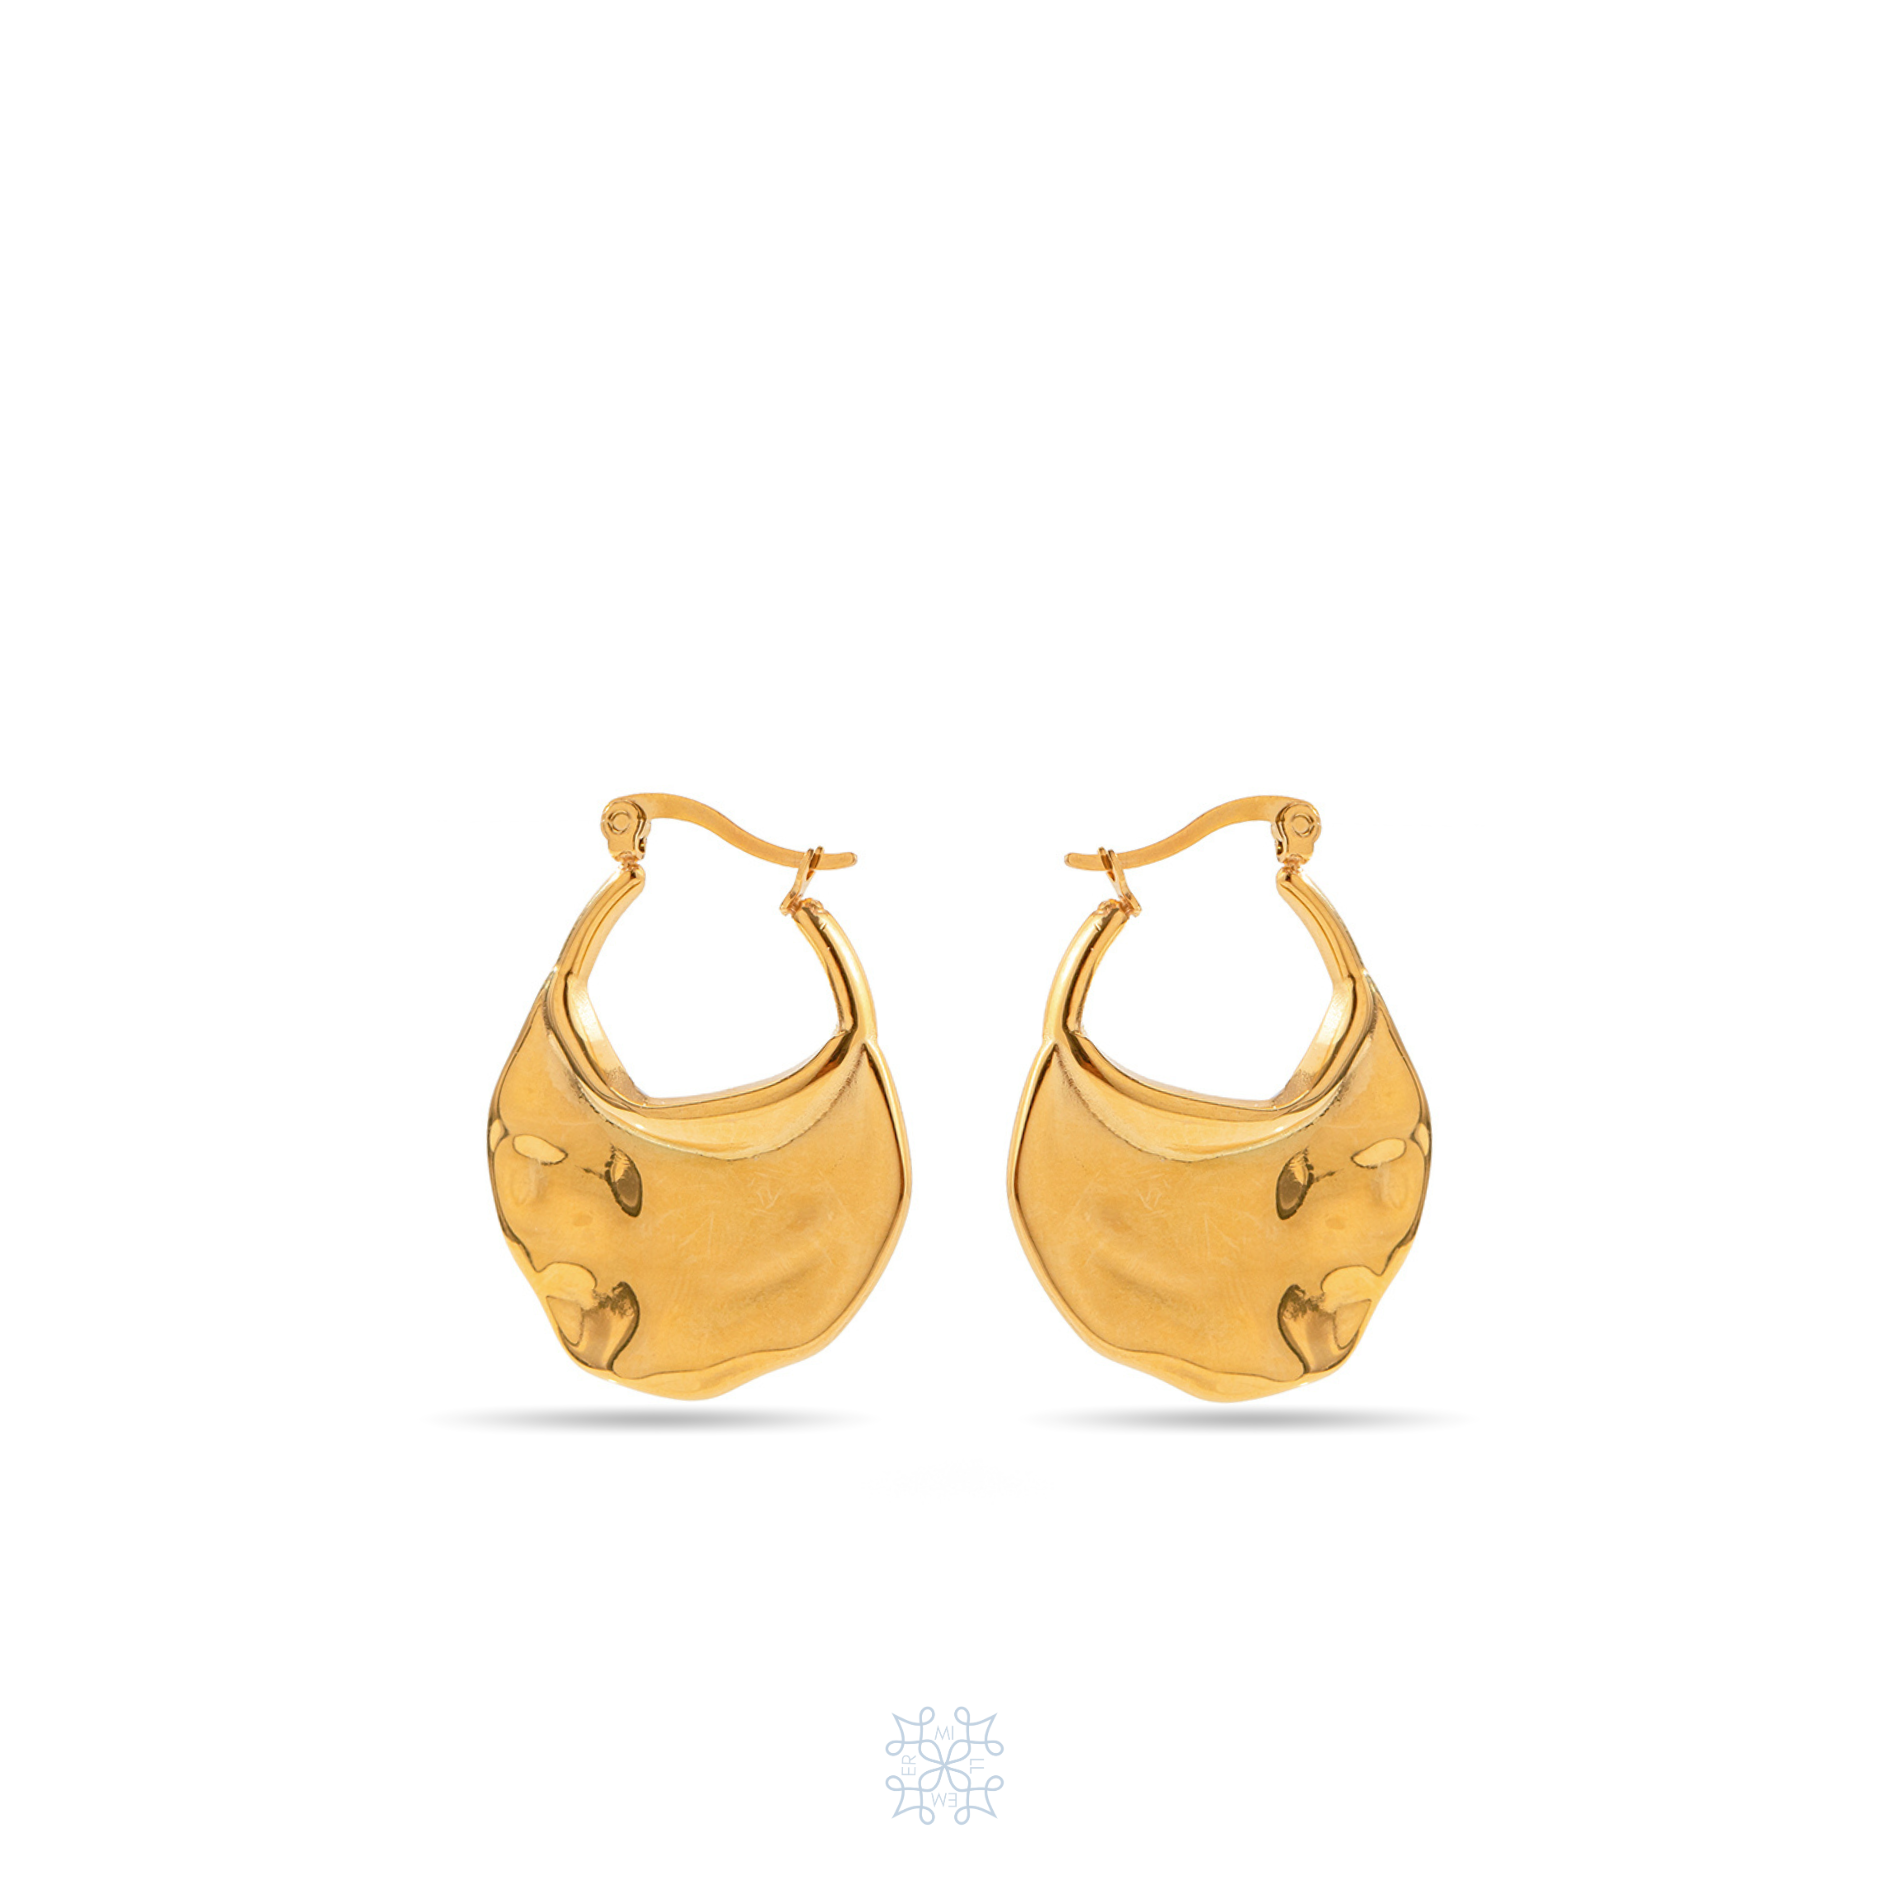 Gold earrings in the irregular oval shape.